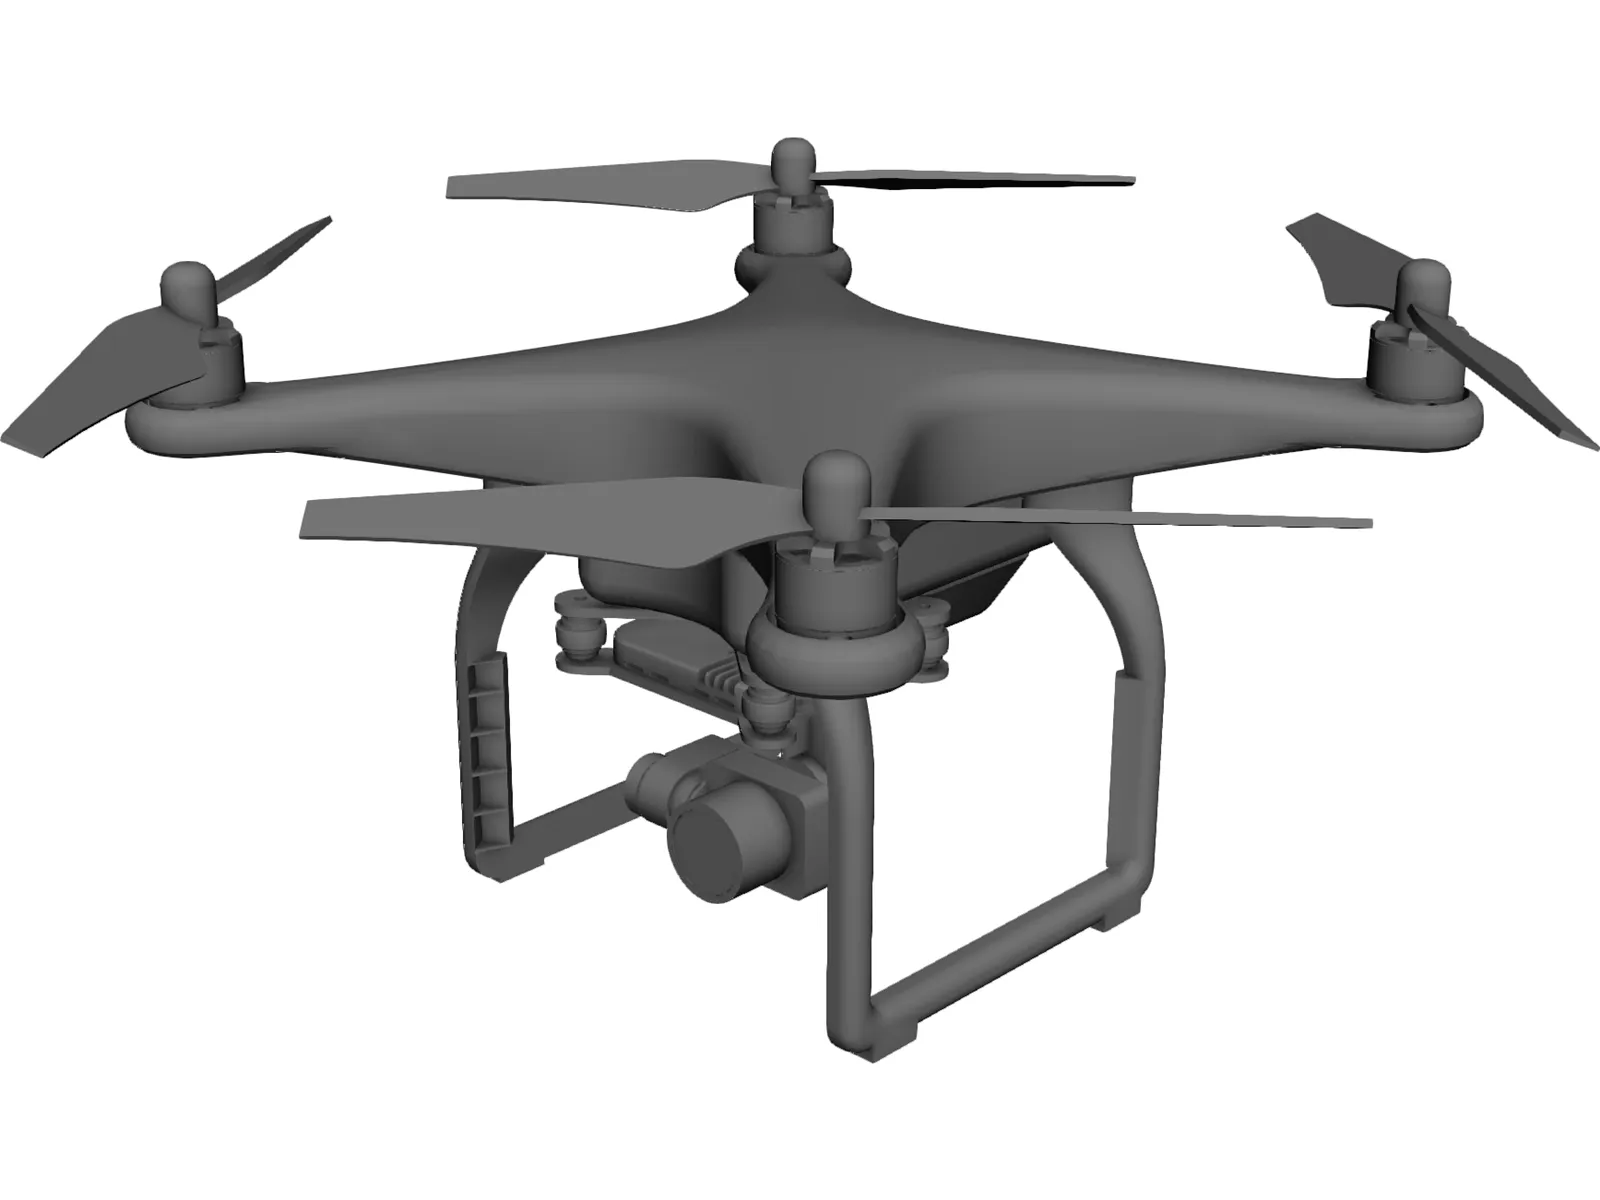 busy Last Defeated DJI Phantom 3 Drone 3D CAD Model - 3D CAD Browser